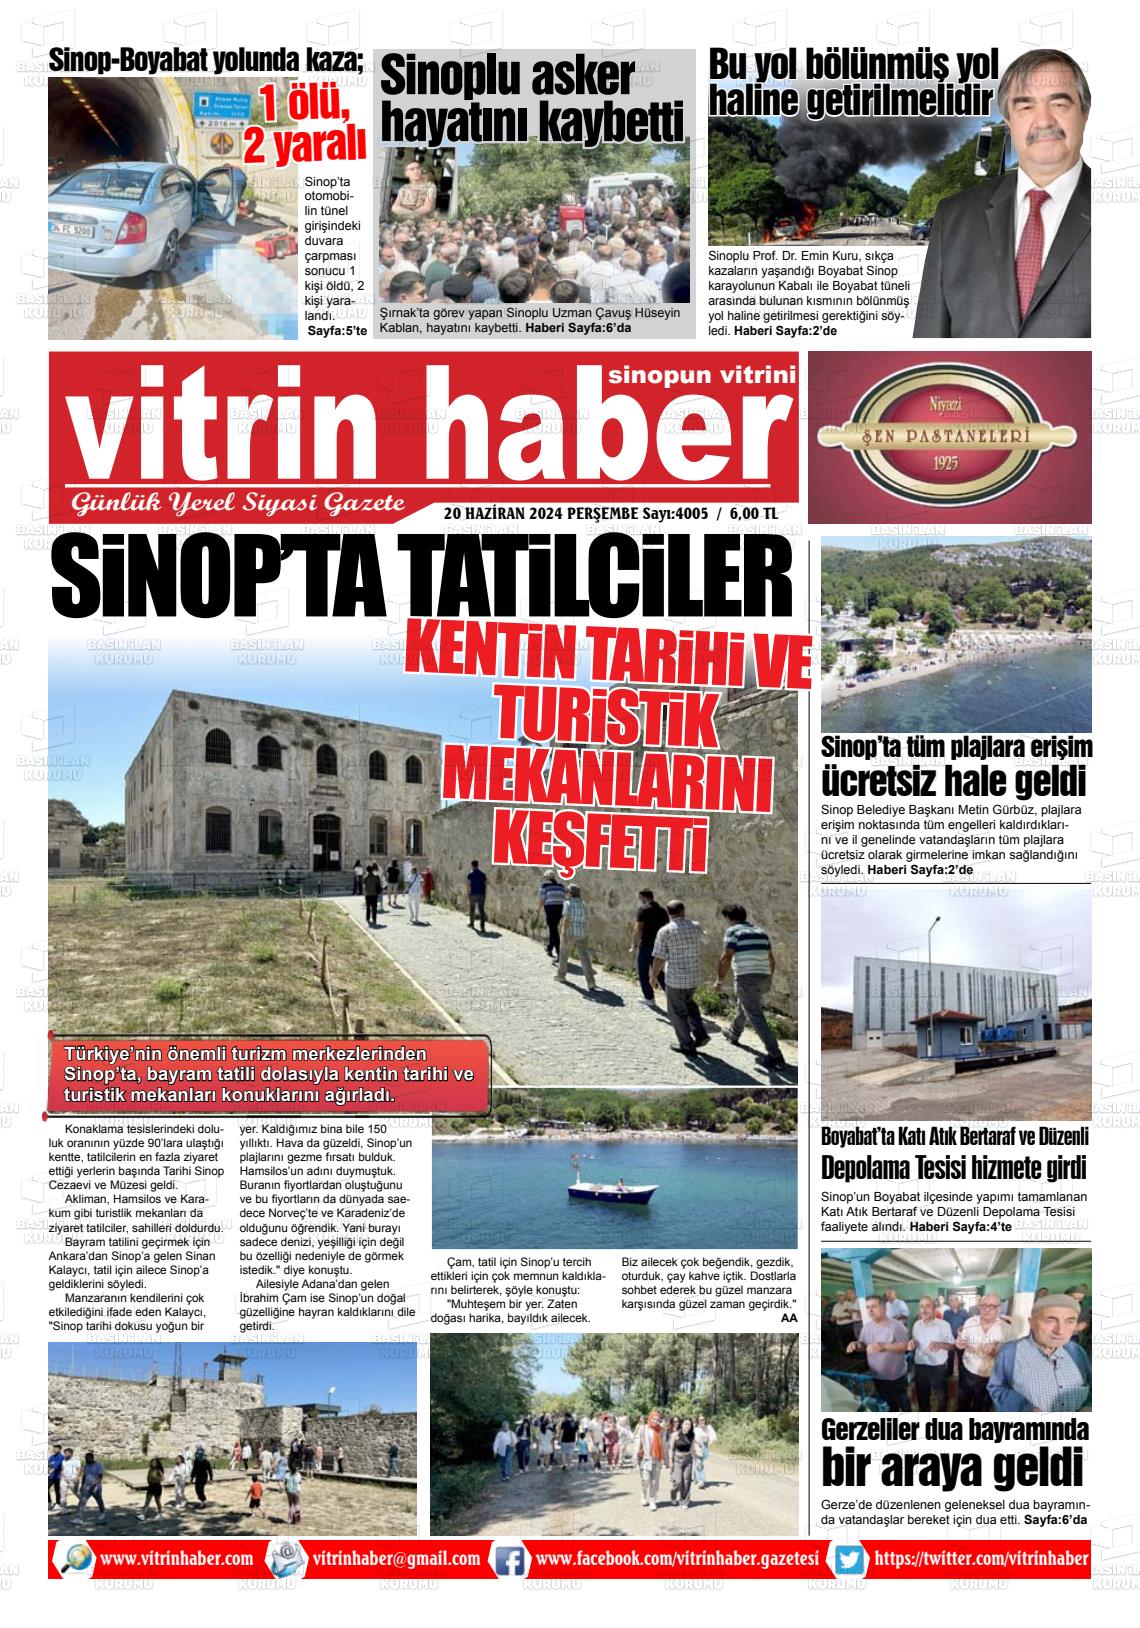 VİTRİN HABER Gazetesi